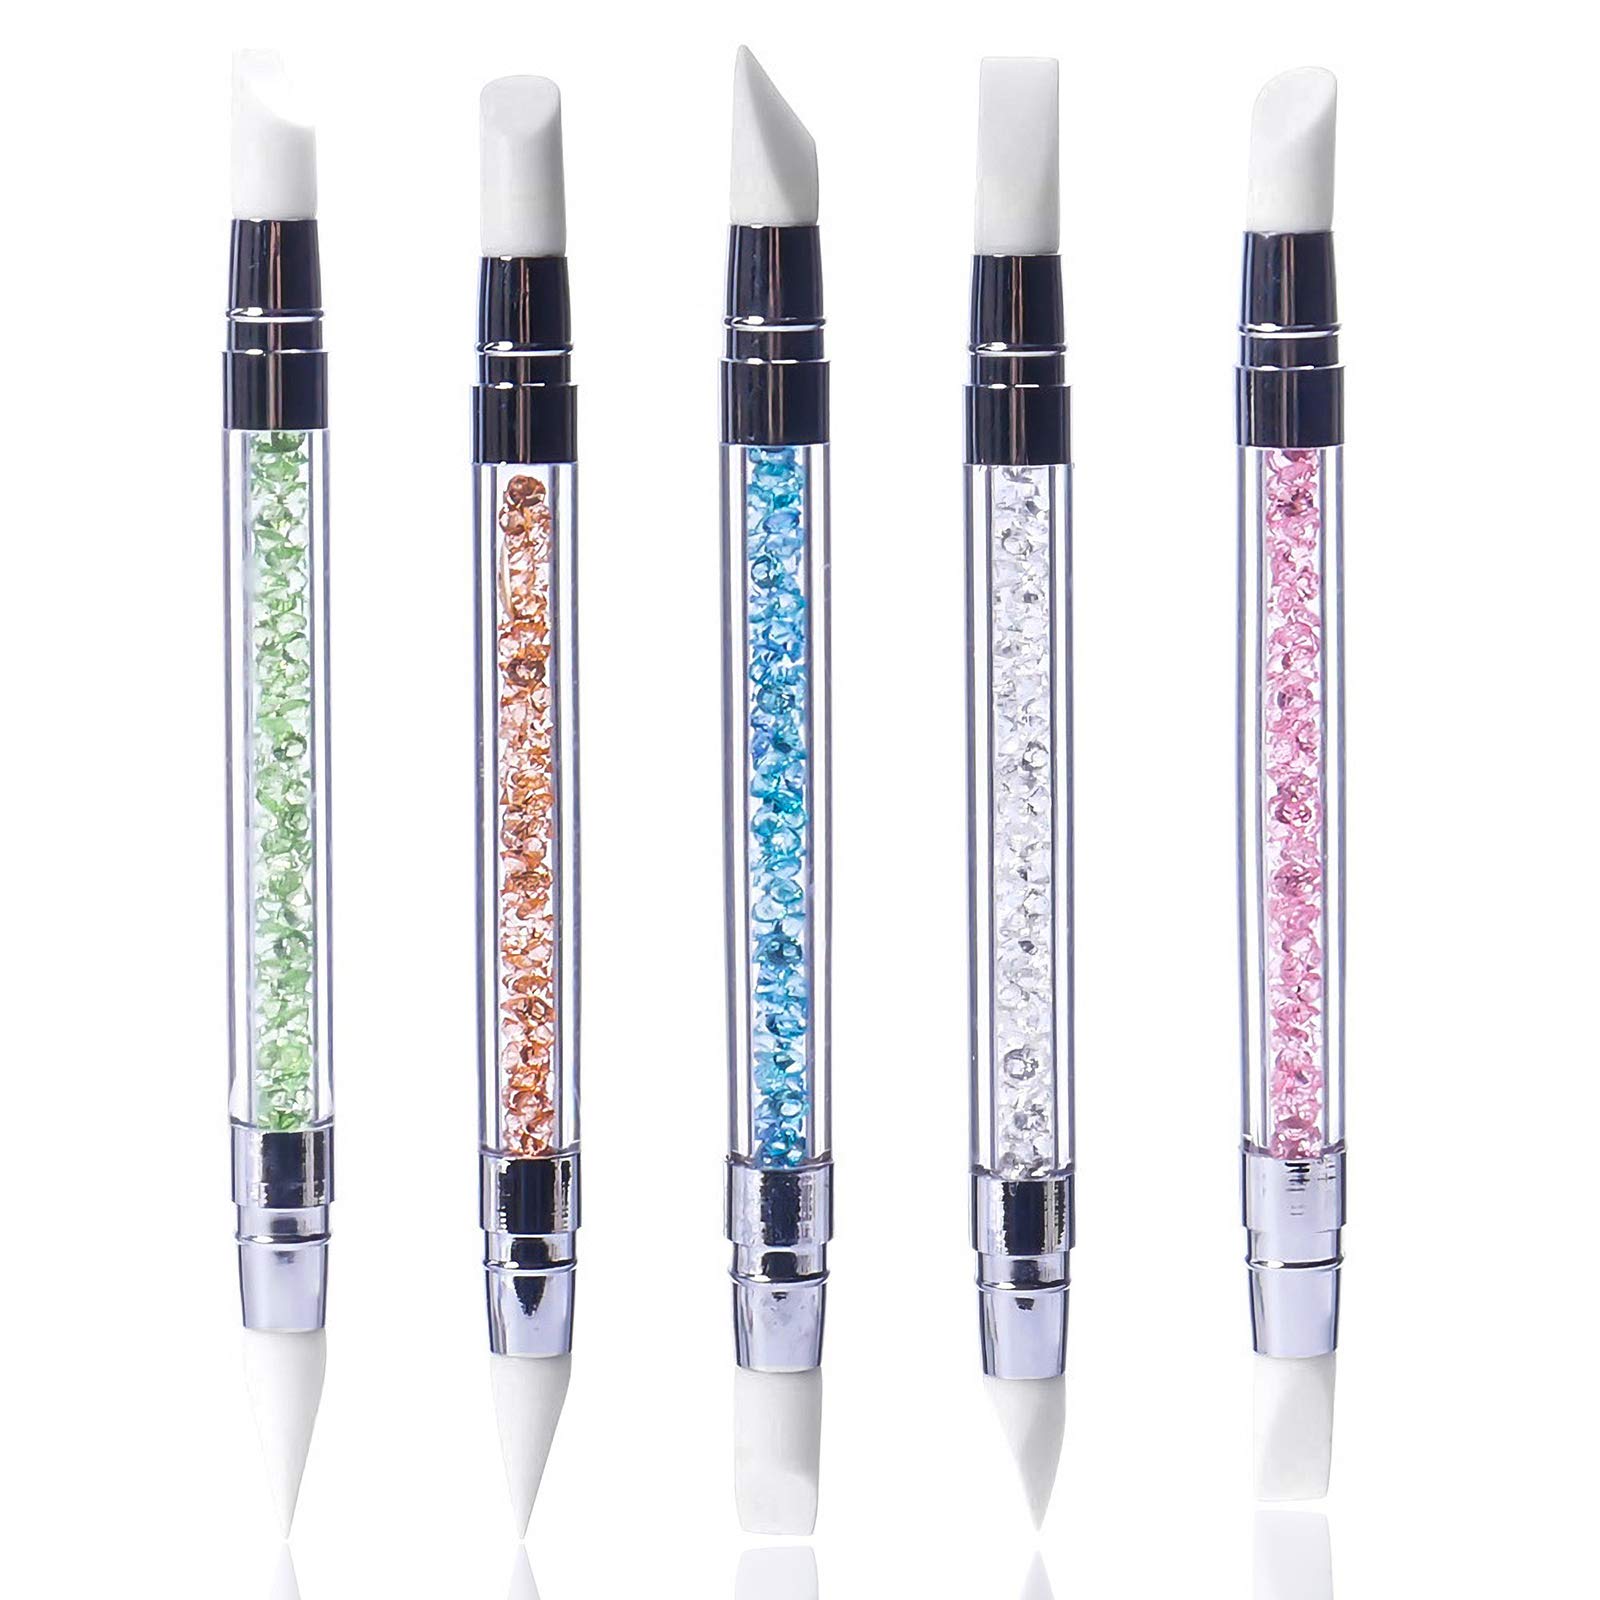 Hanyoushengvance 5Pcs Silicone Nail Art Acrylic Pen Brushes set Rhinestone  Nail Polish Carving Pen Rubber Tip